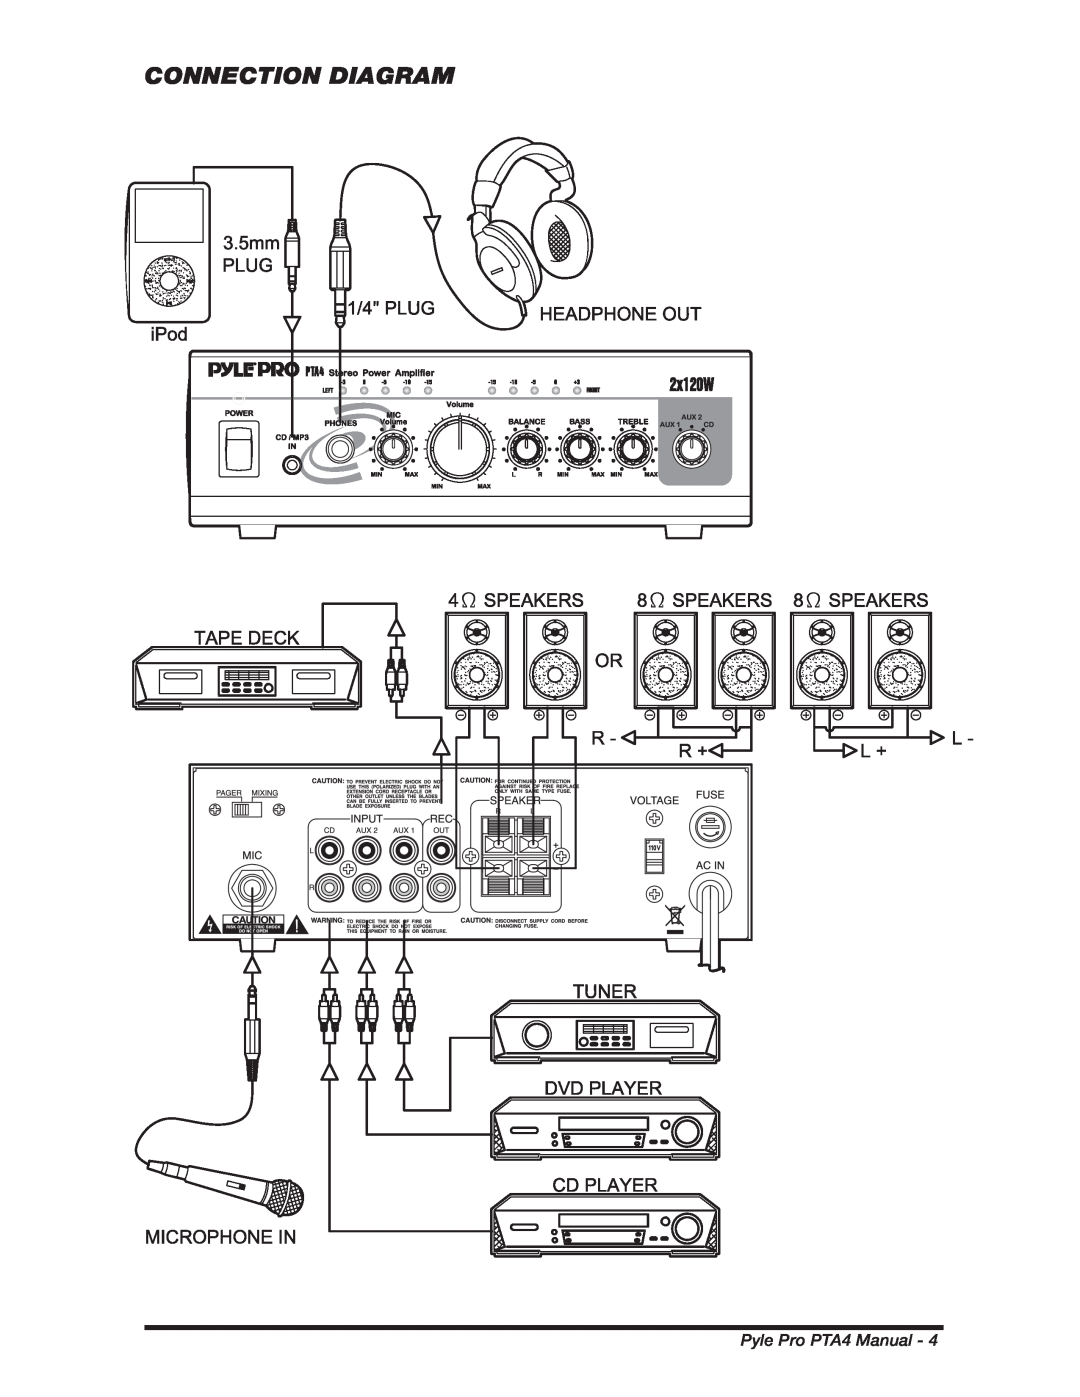 PYLE Audio manual Connection Diagram, Pyle Pro PTA4 Manual 